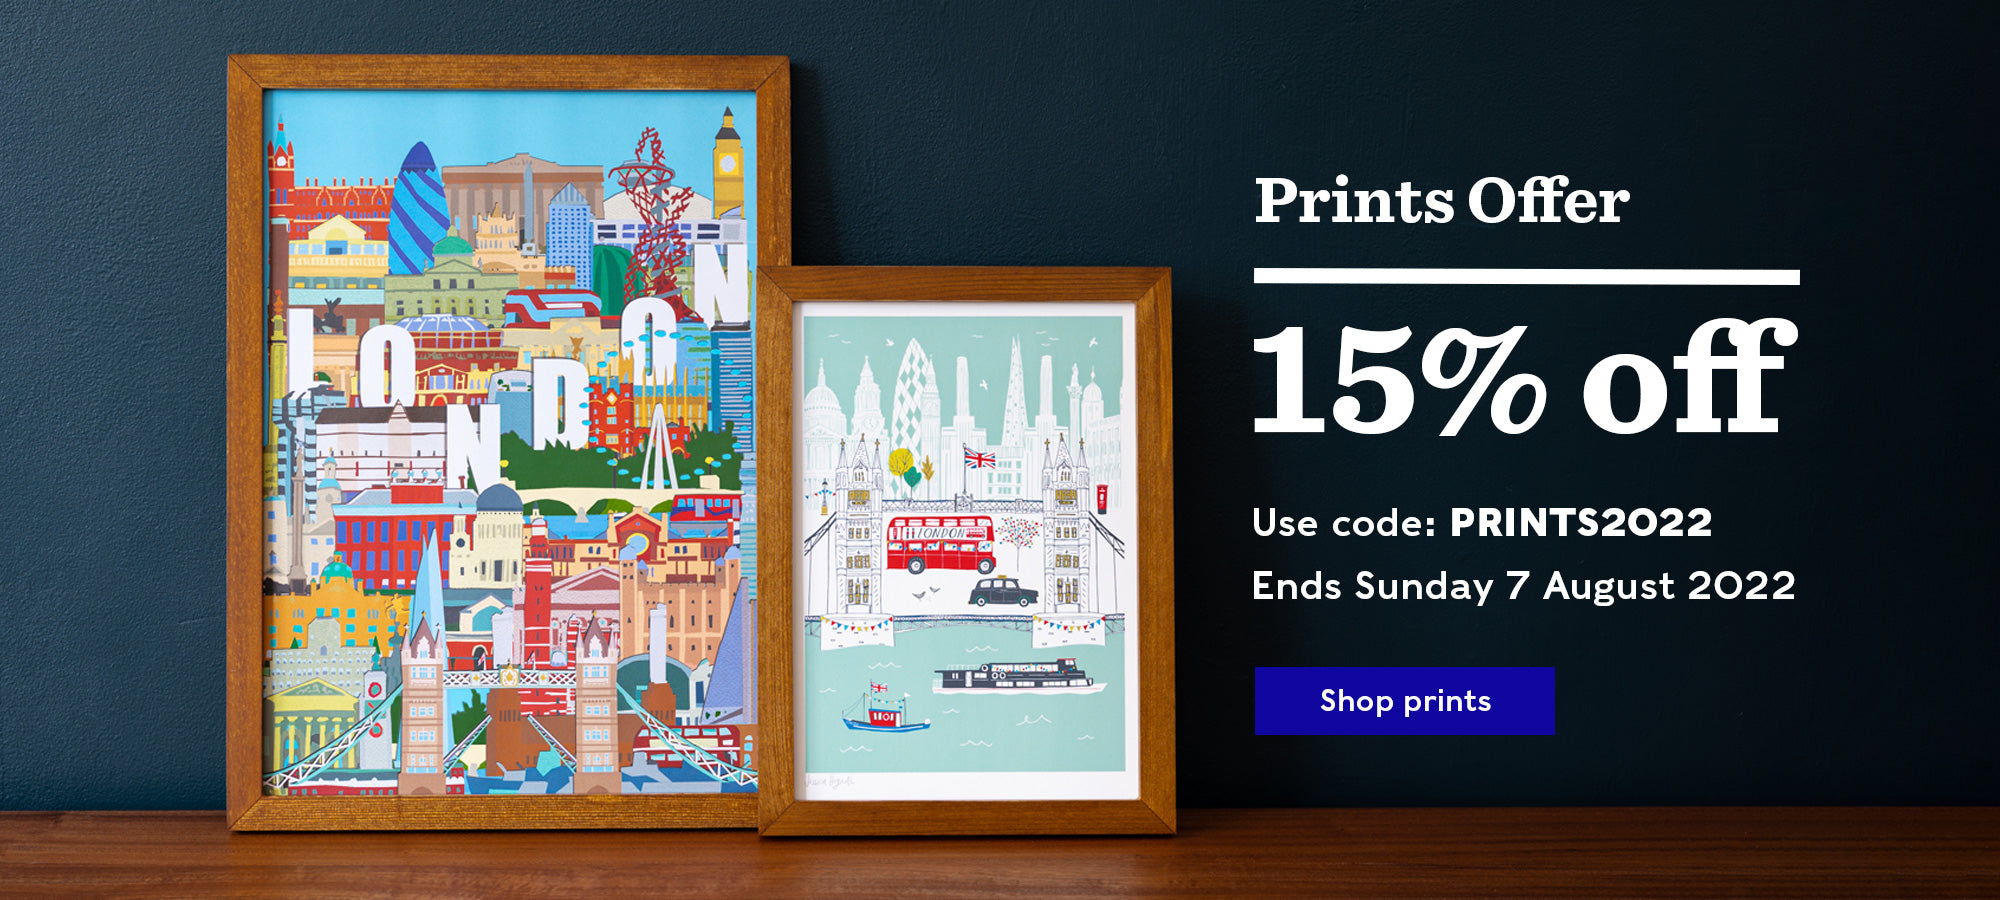 15% off prints this summer at Tower Bridge